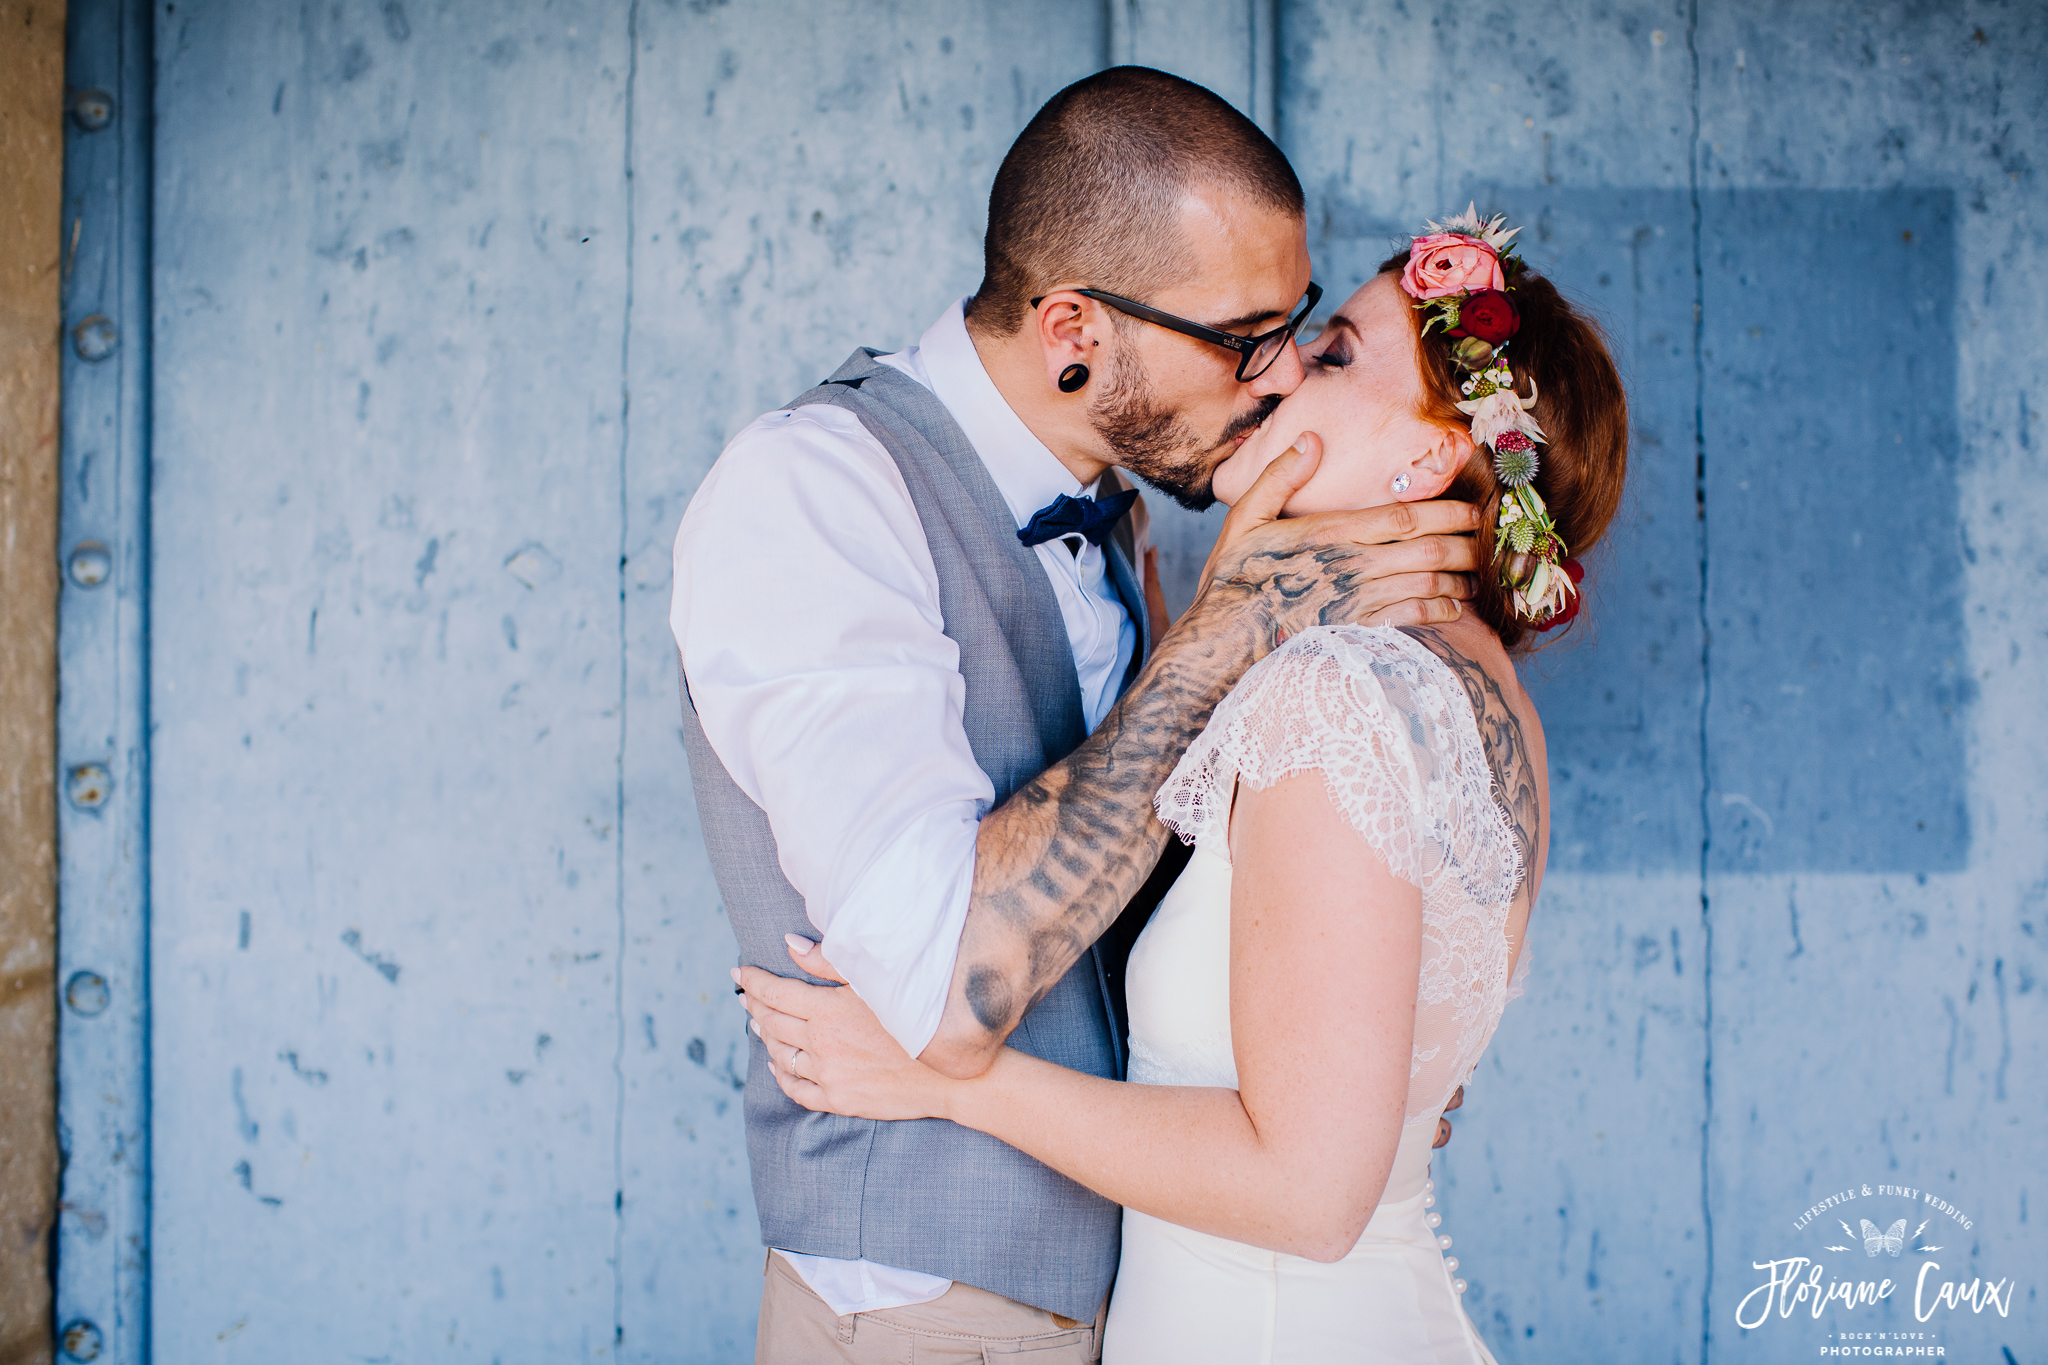 photographe-mariage-toulouse-rocknroll-maries-tatoues-floriane-caux-51